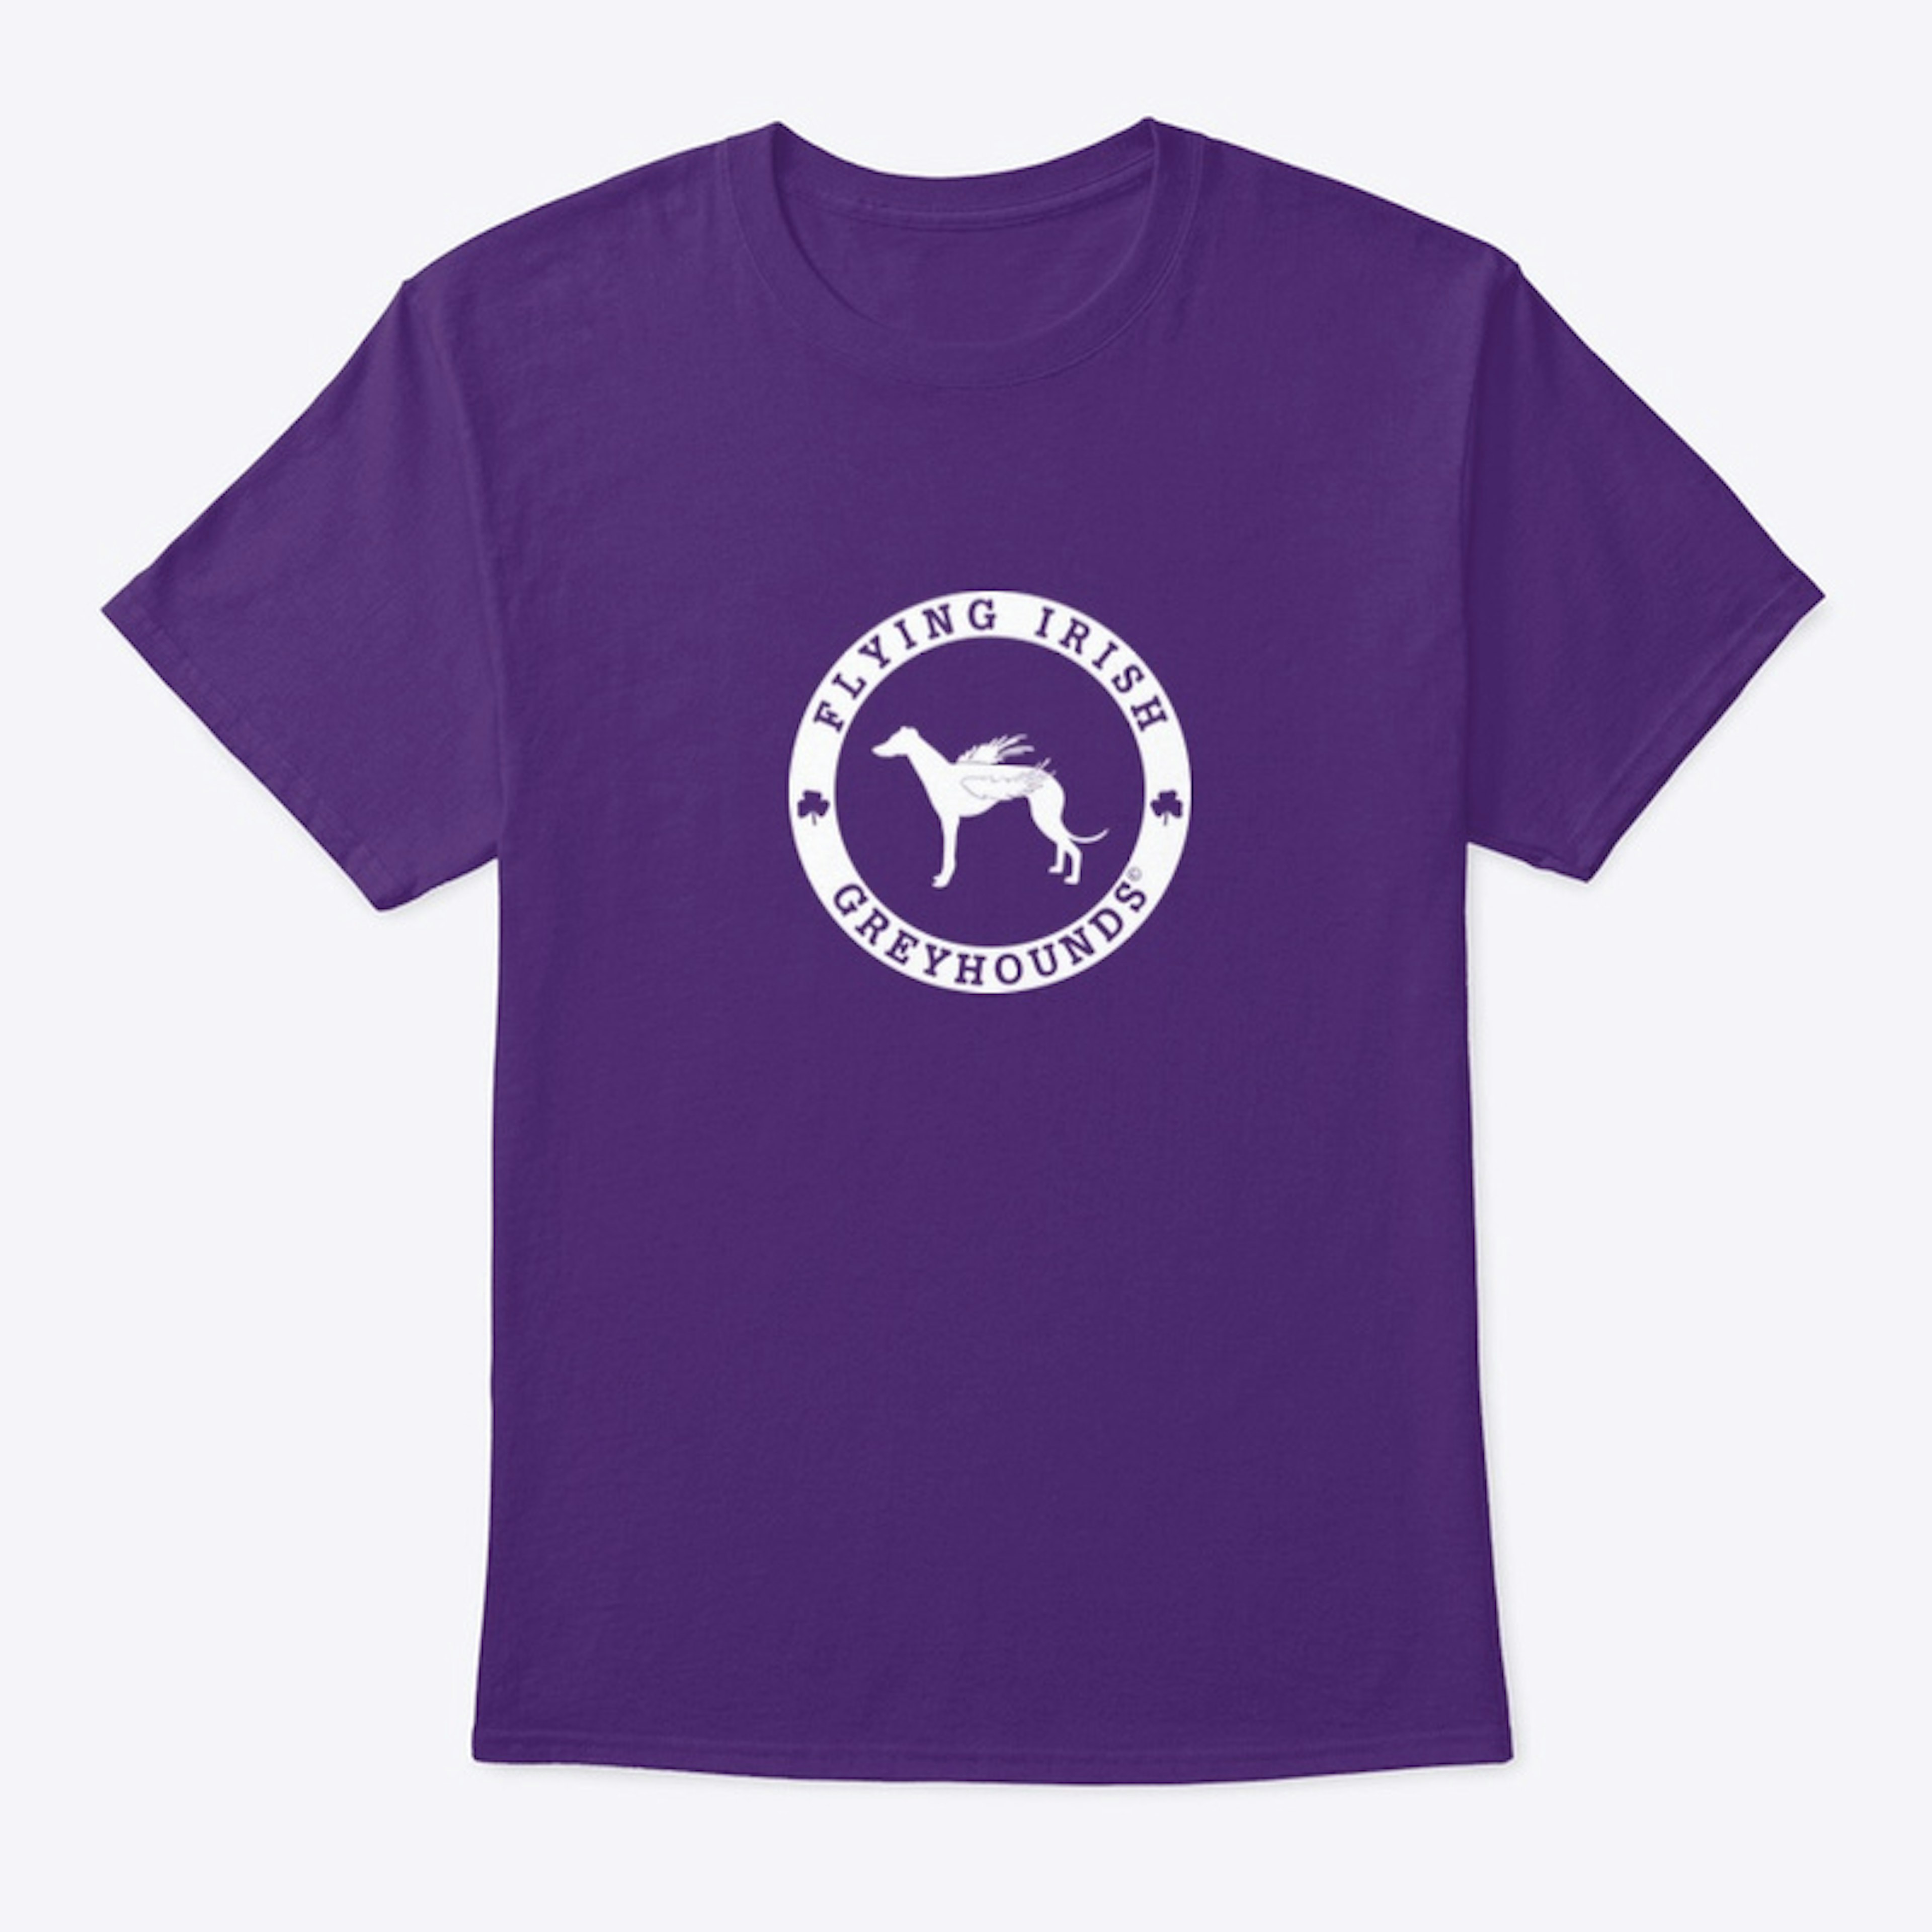 100% Cotton Casual Greyhound Tee Shirt